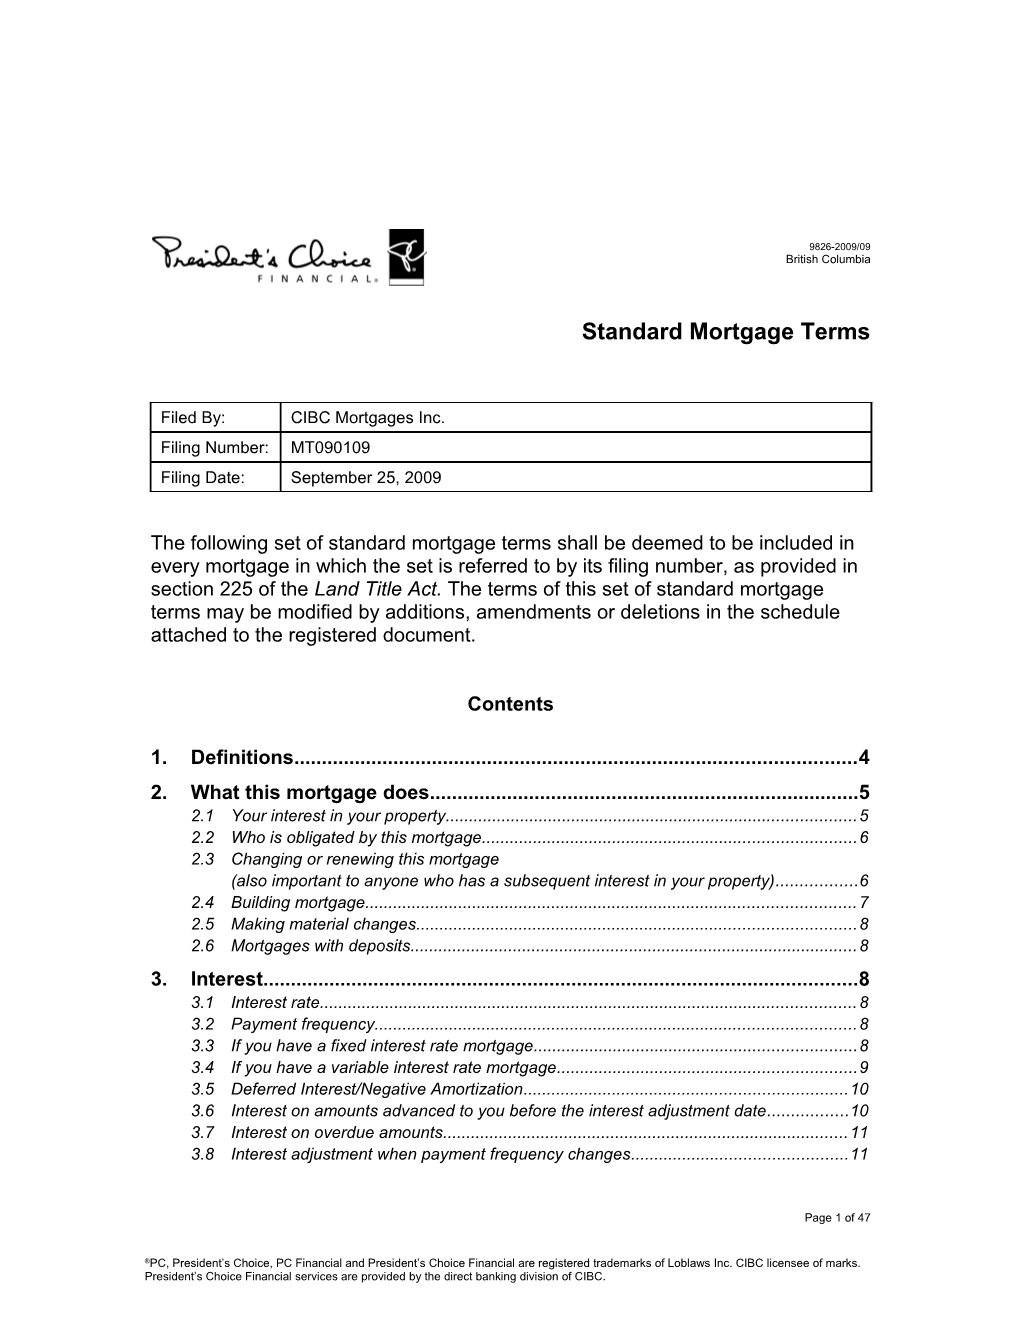 Standard Mortgage Terms (9826 British Columbia-2009/09)